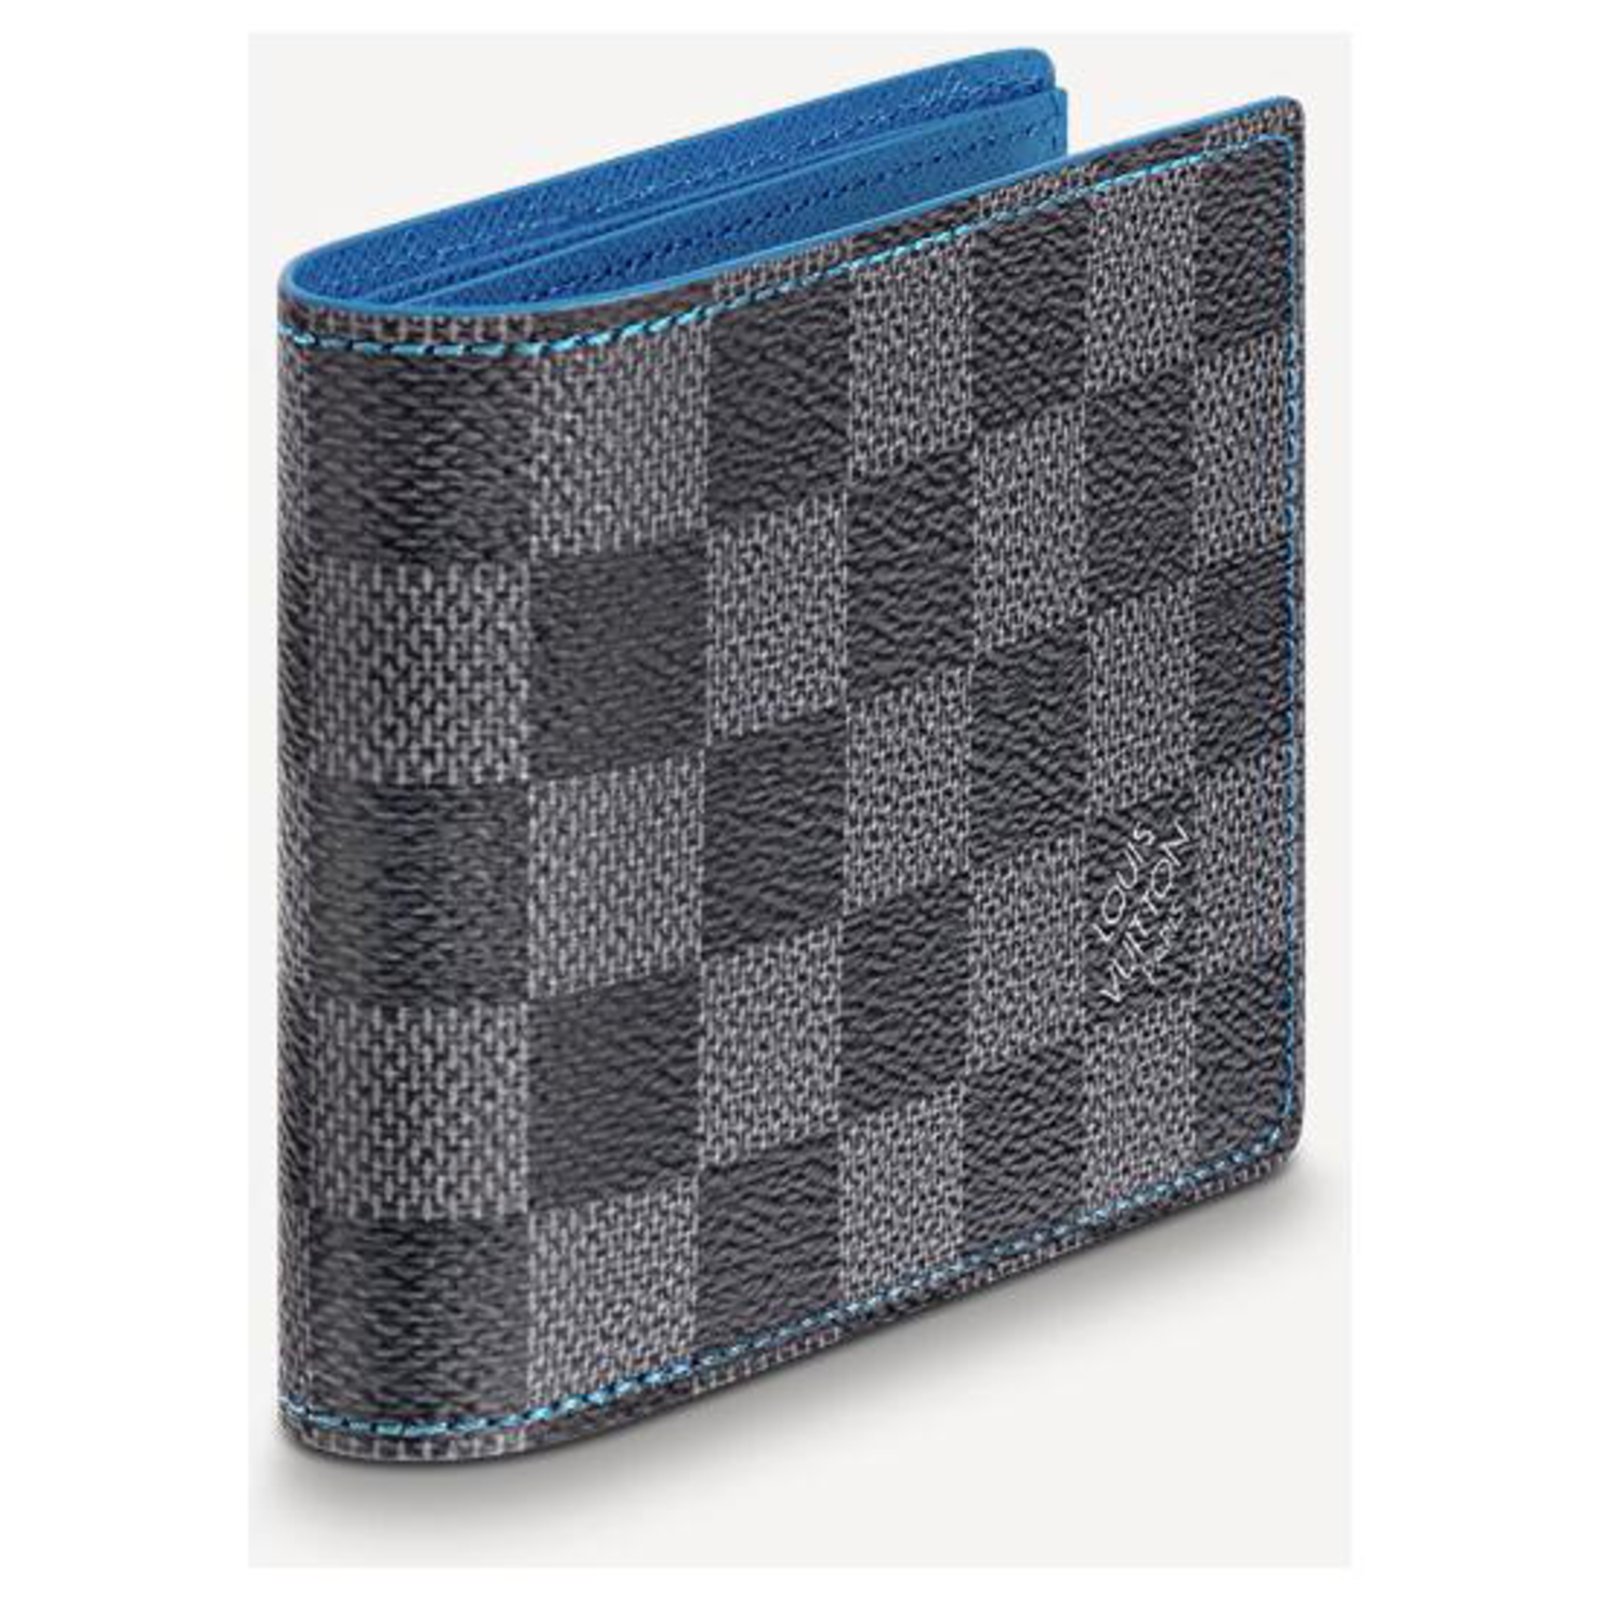 Louis Vuitton Slender Wallet, Blue, One Size